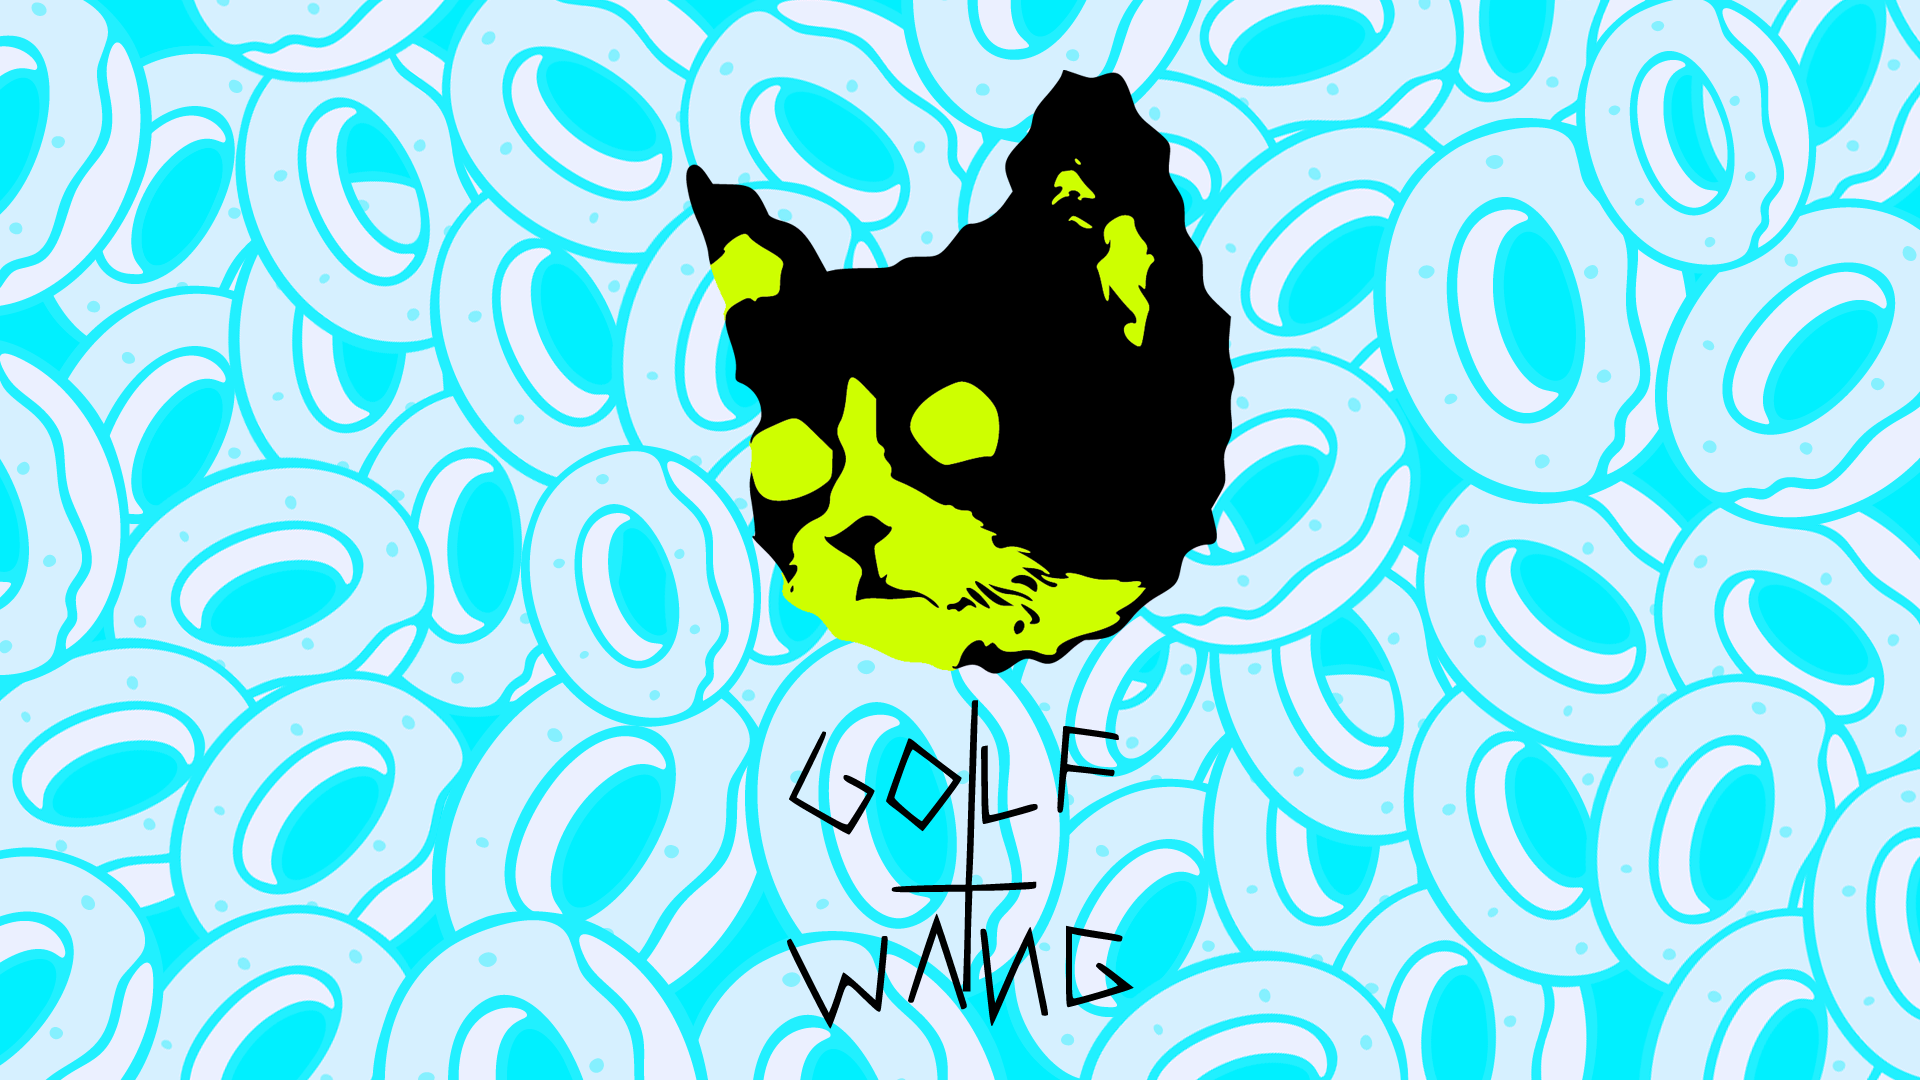 Golf Wang Wallpaper Golf wang tron cat by